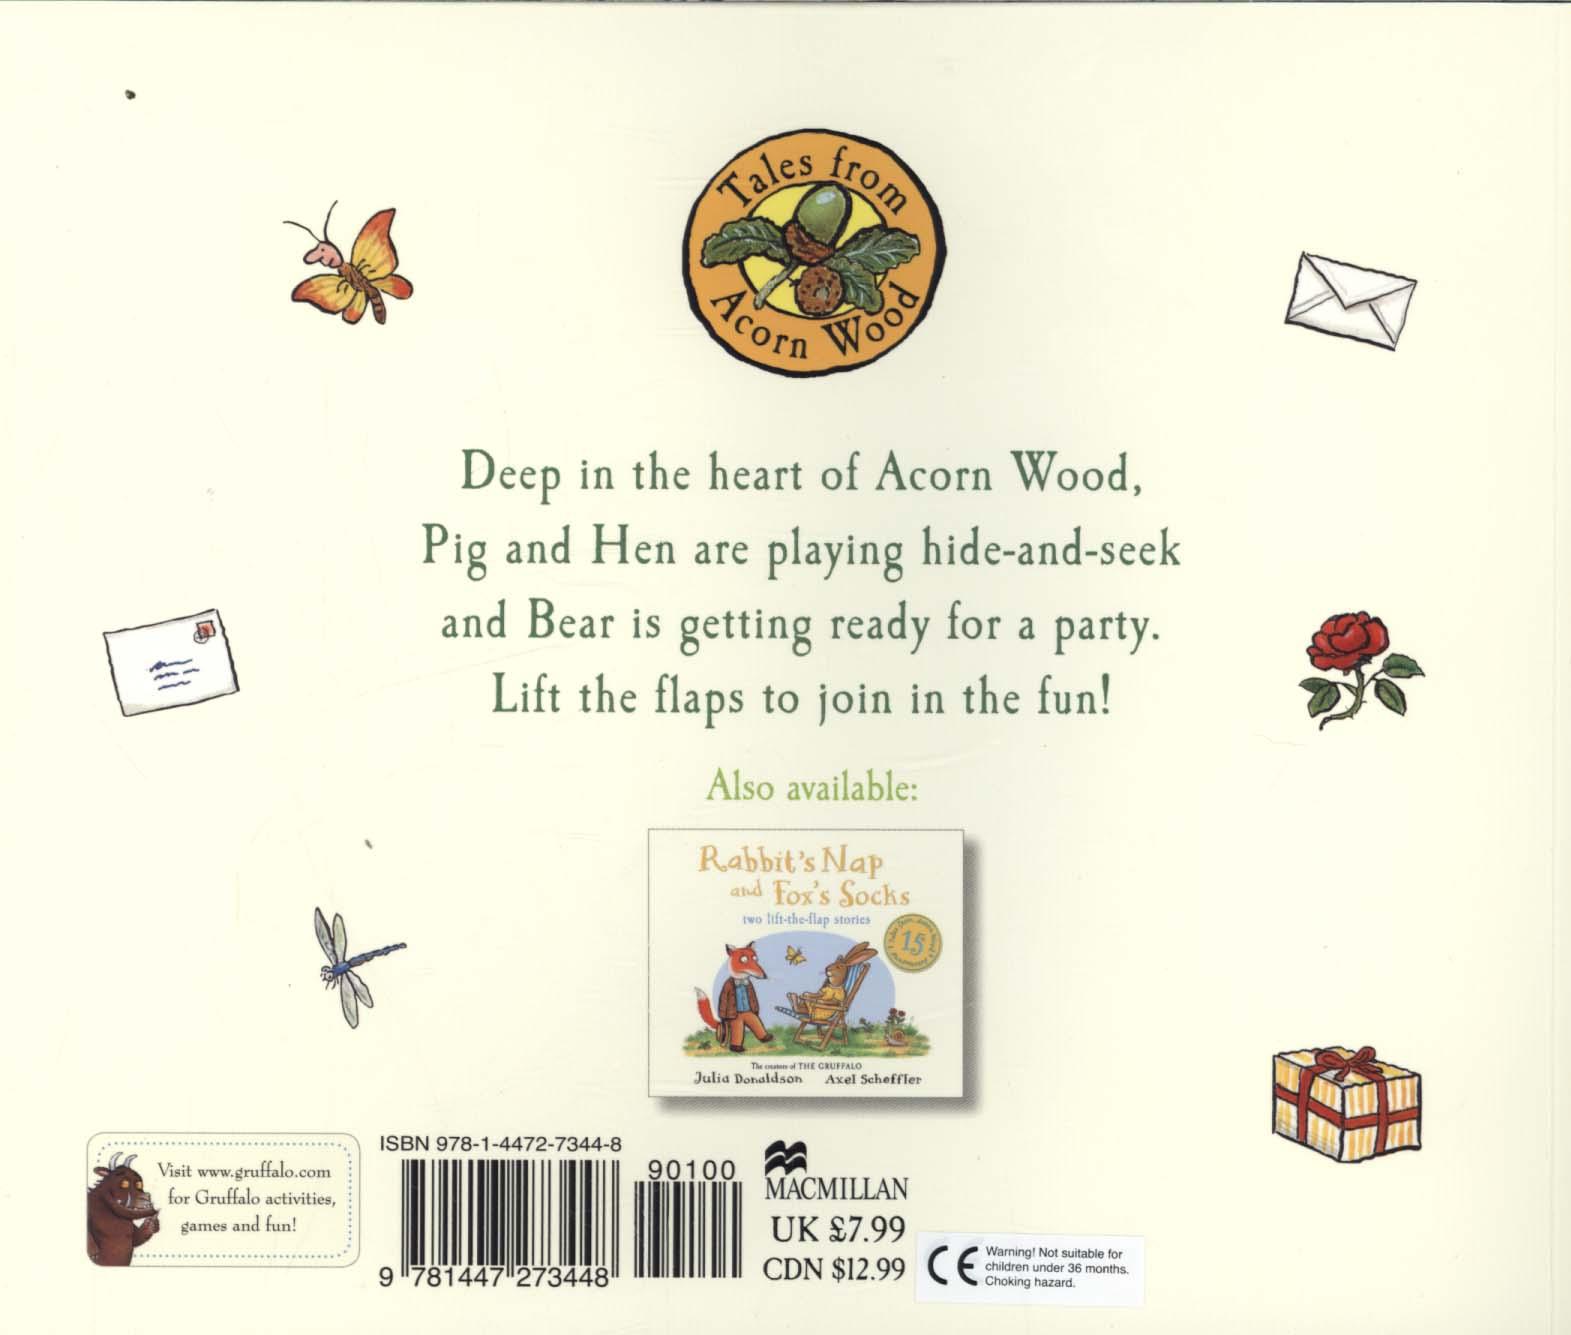 Tales from Acorn Wood: Hide-and-Seek Pig and Postman Bear